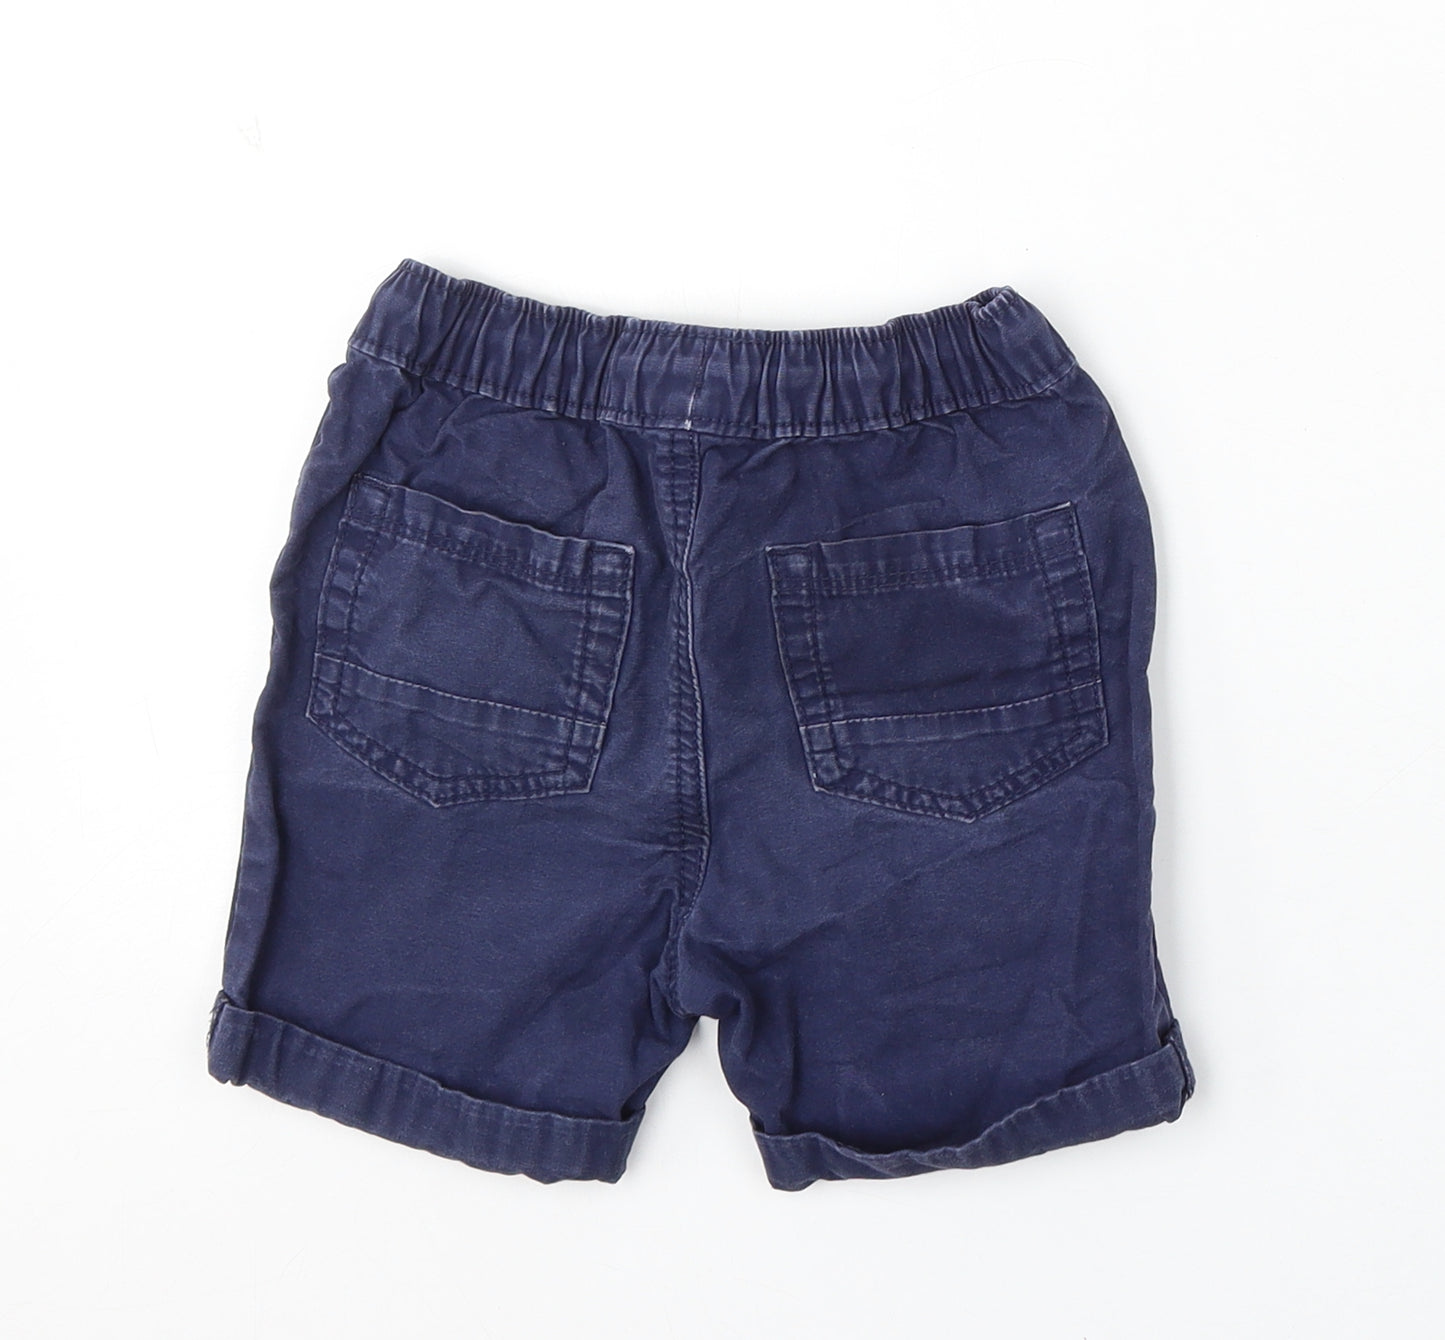 George Boys Black Cotton Cargo Shorts Size 4-5 Years Regular Drawstring